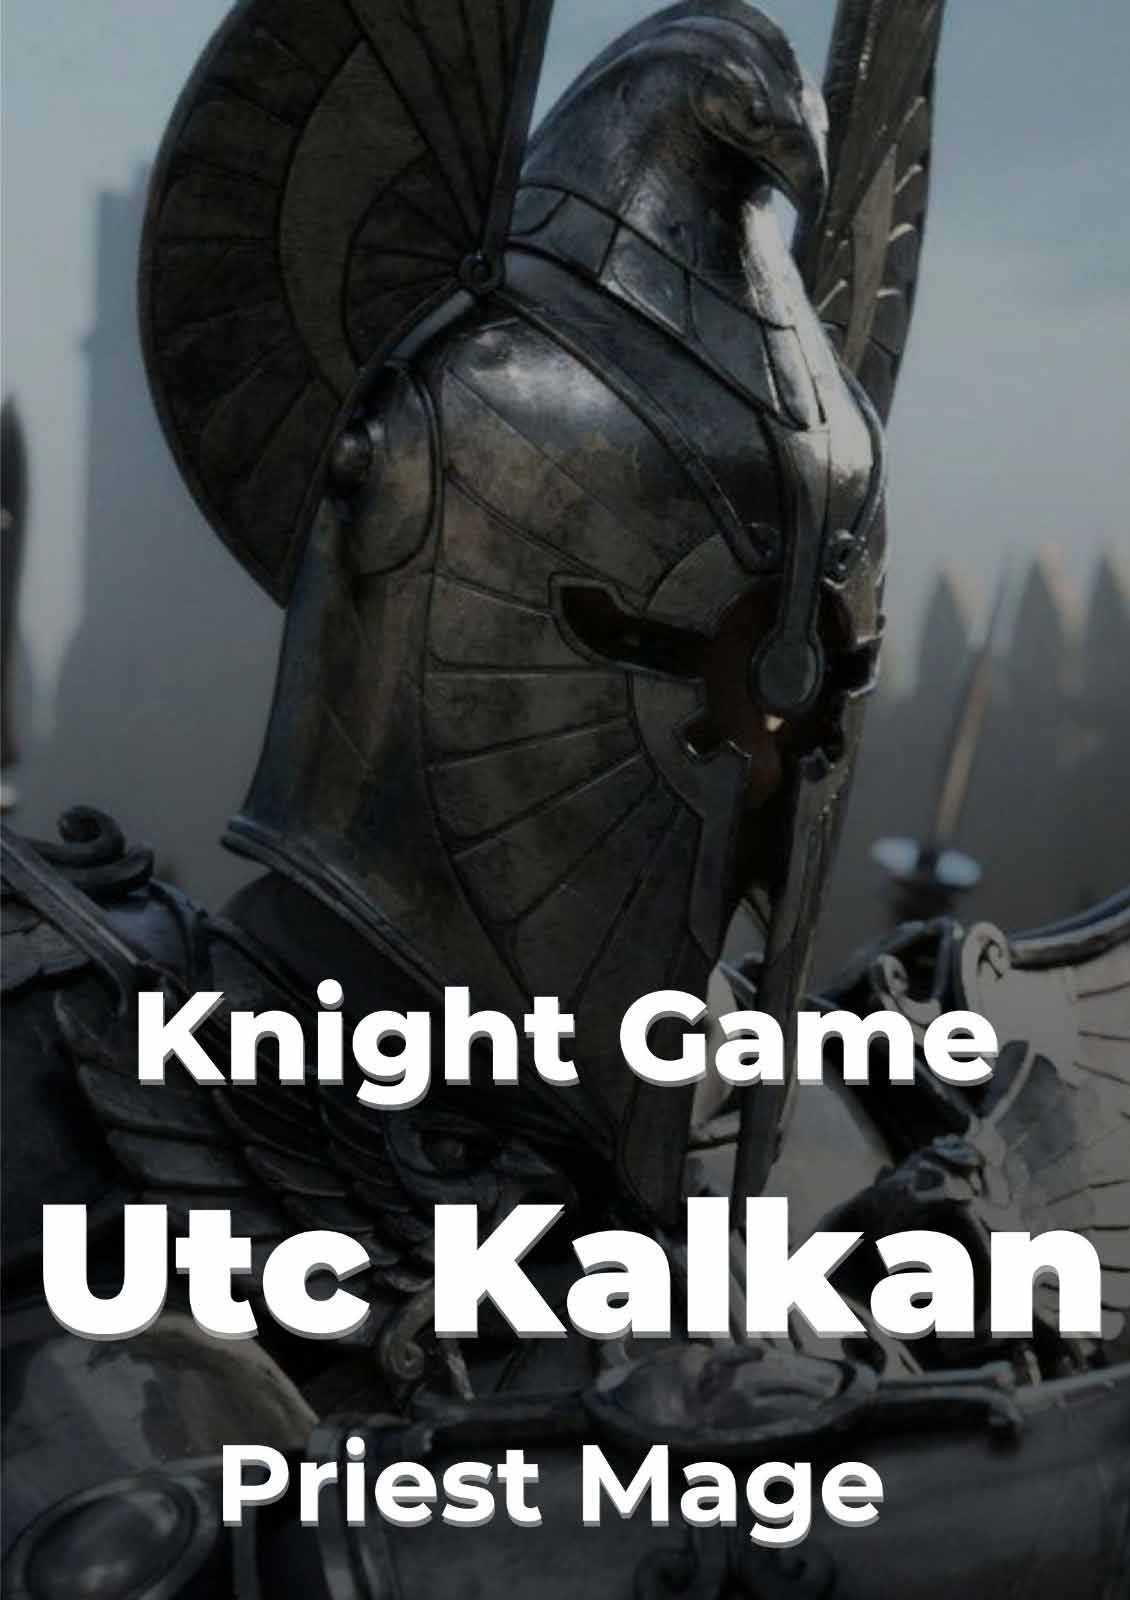 UTC KALKAN(Warrior,Priest,Kalkan)